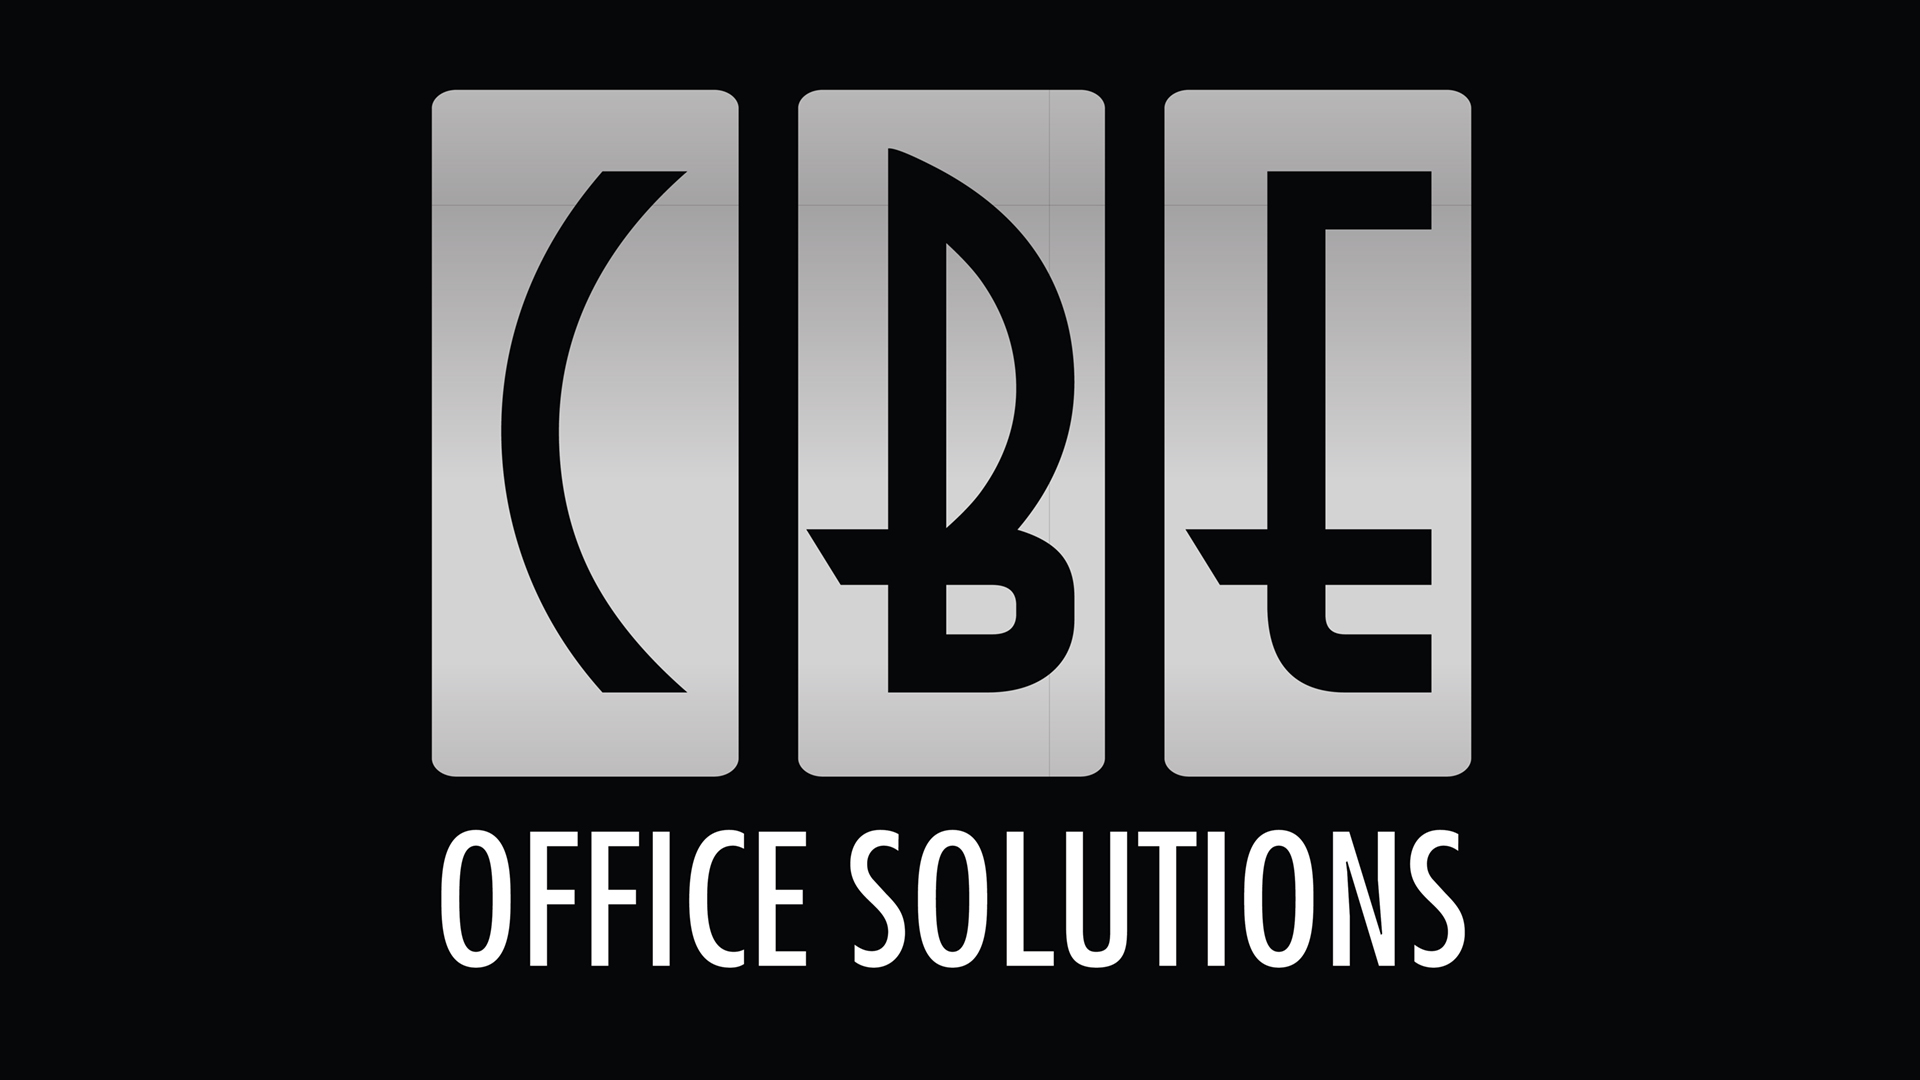 CBE Office Solutions logo